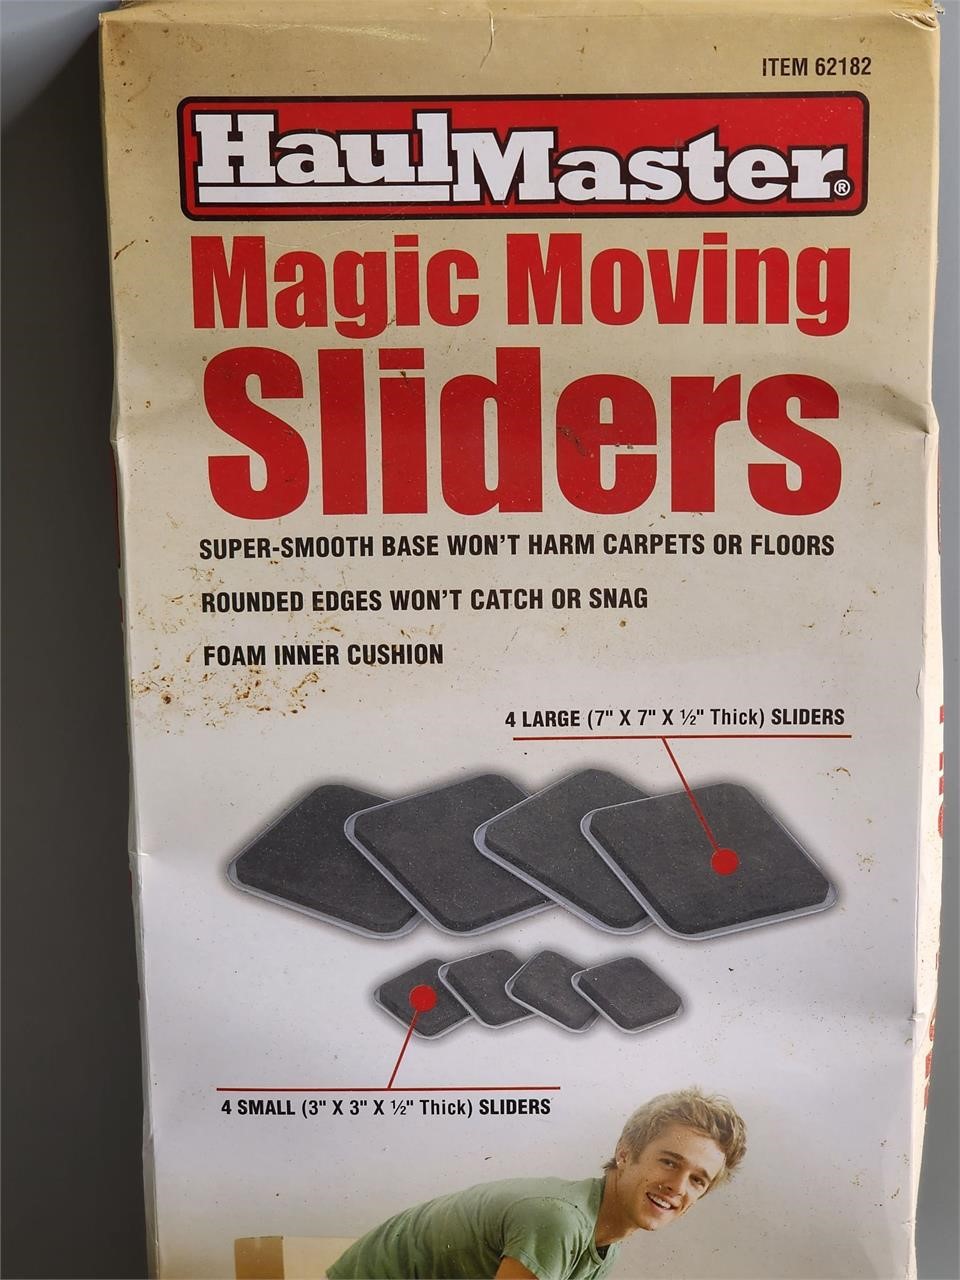 Magic movers sliders